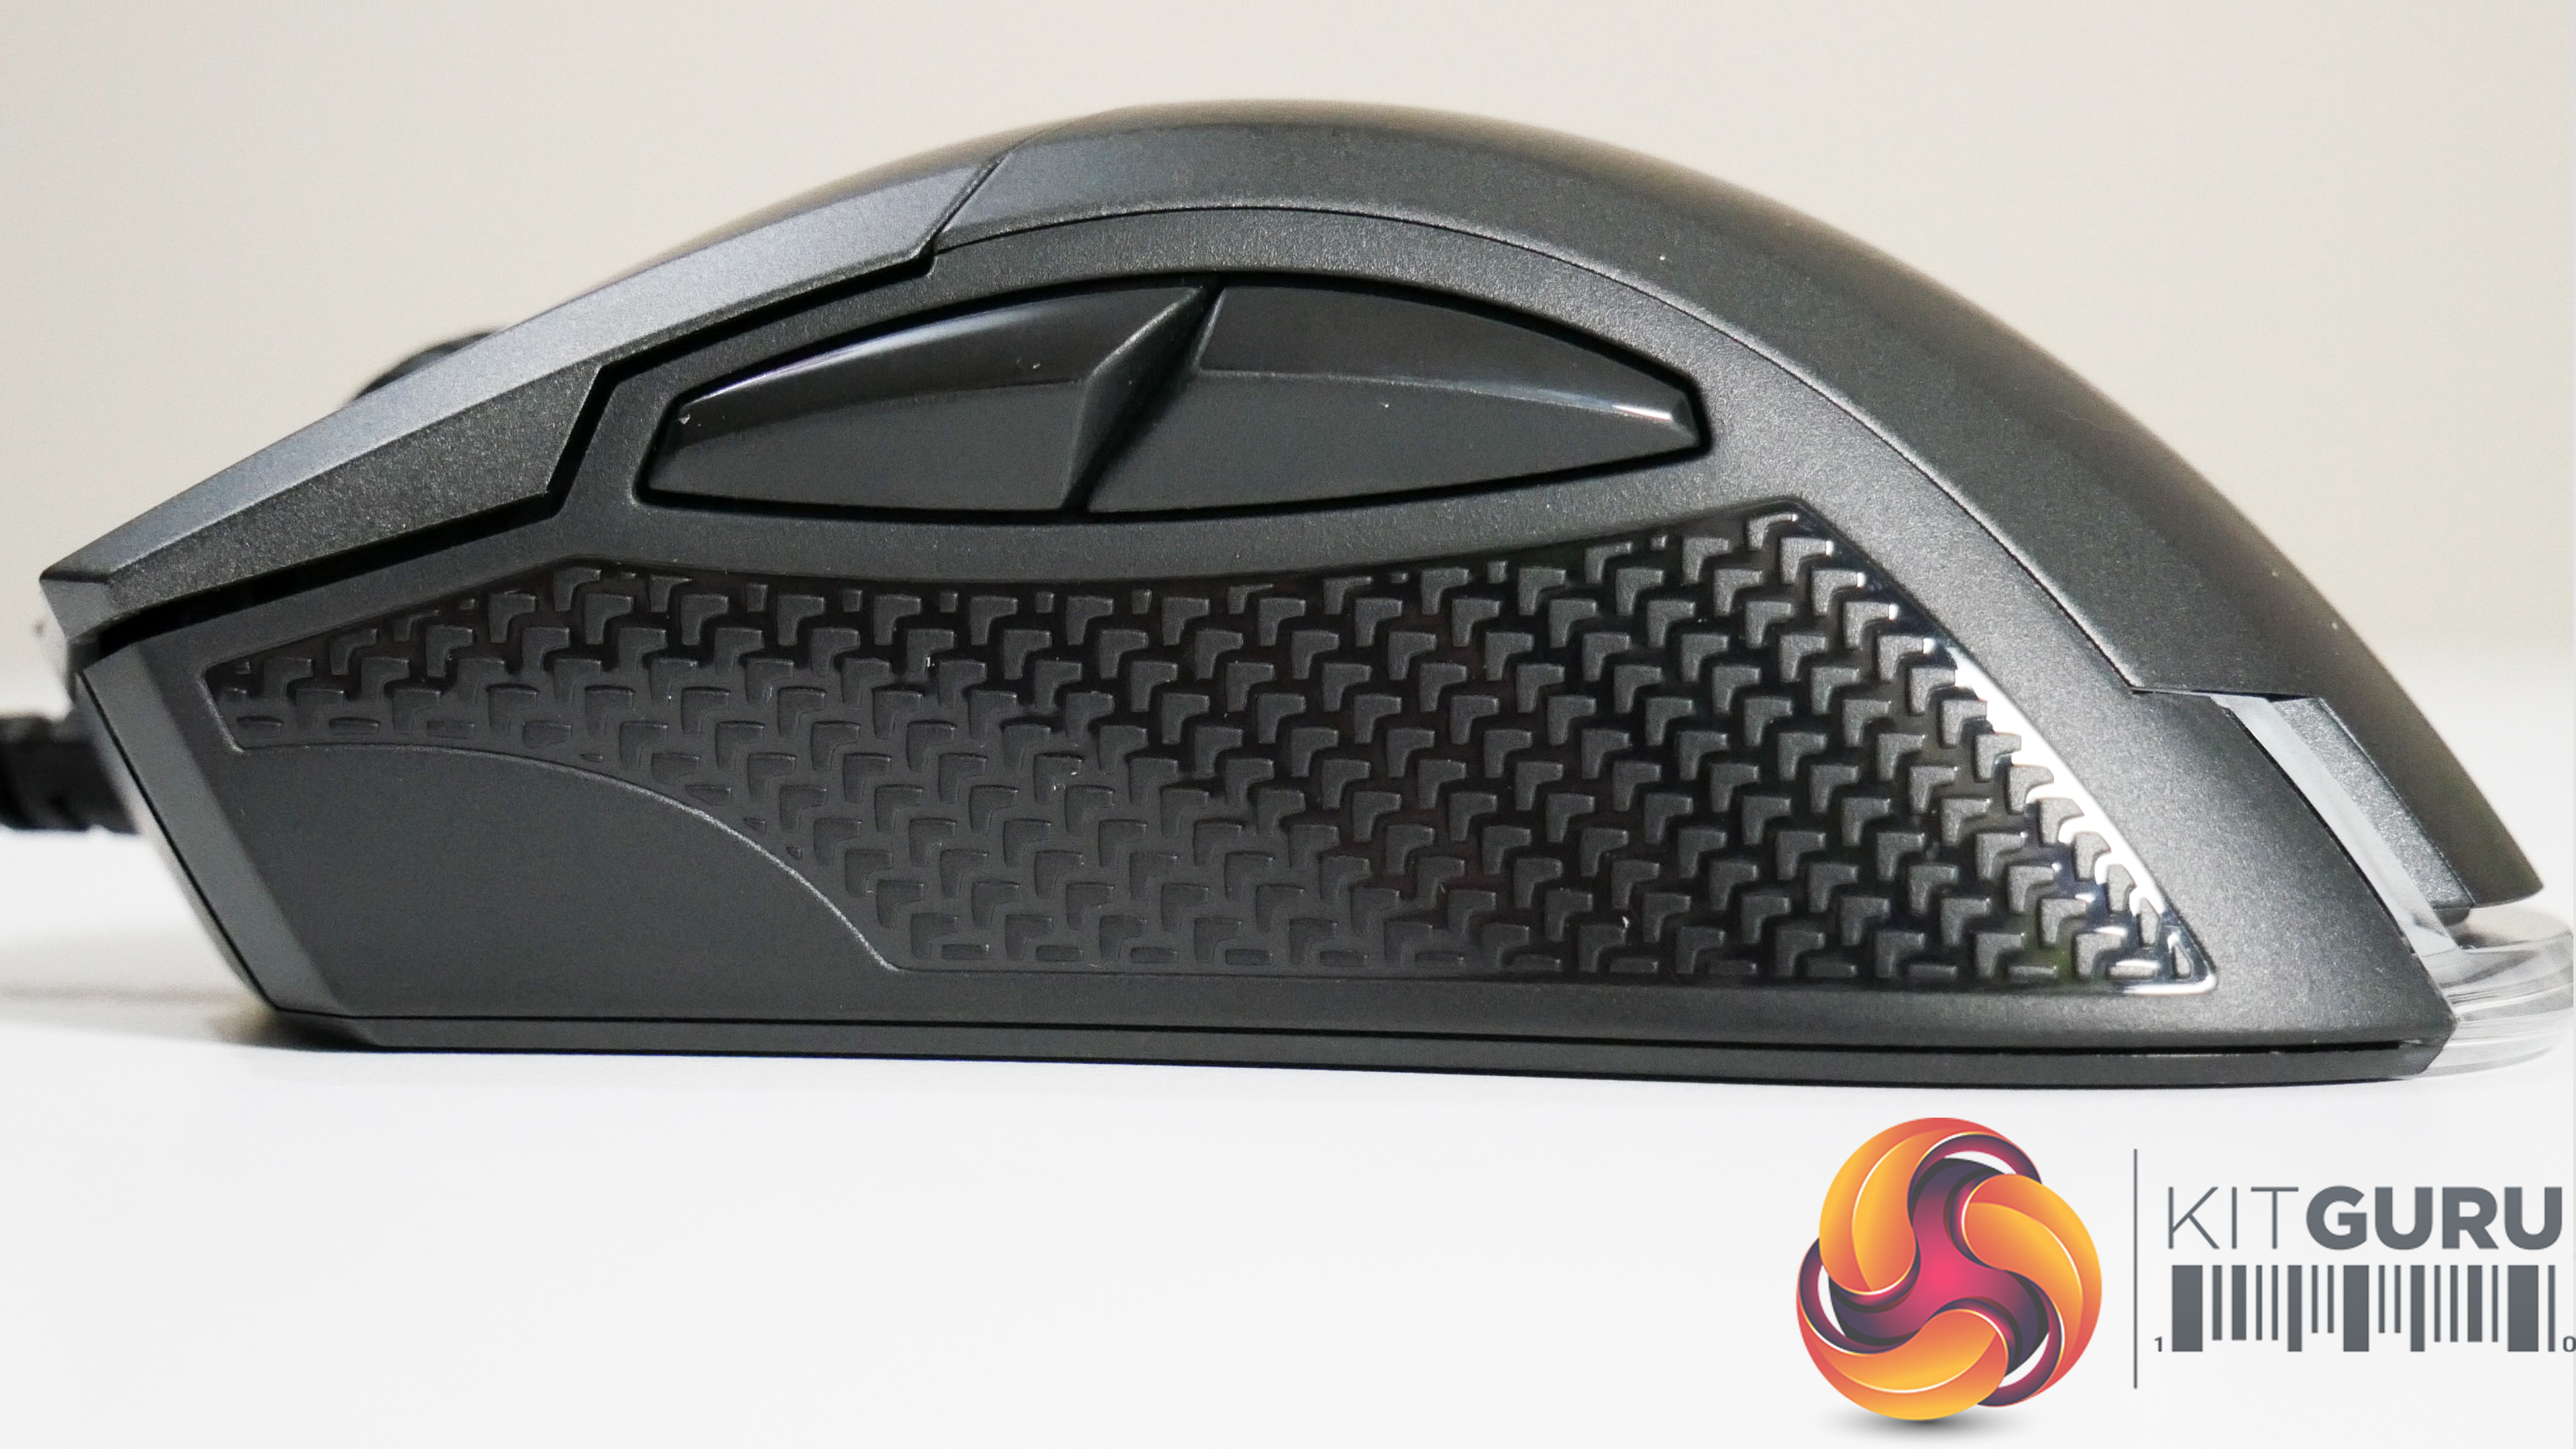 GM50 Review KitGuru Clutch | MSI Mouse Gaming